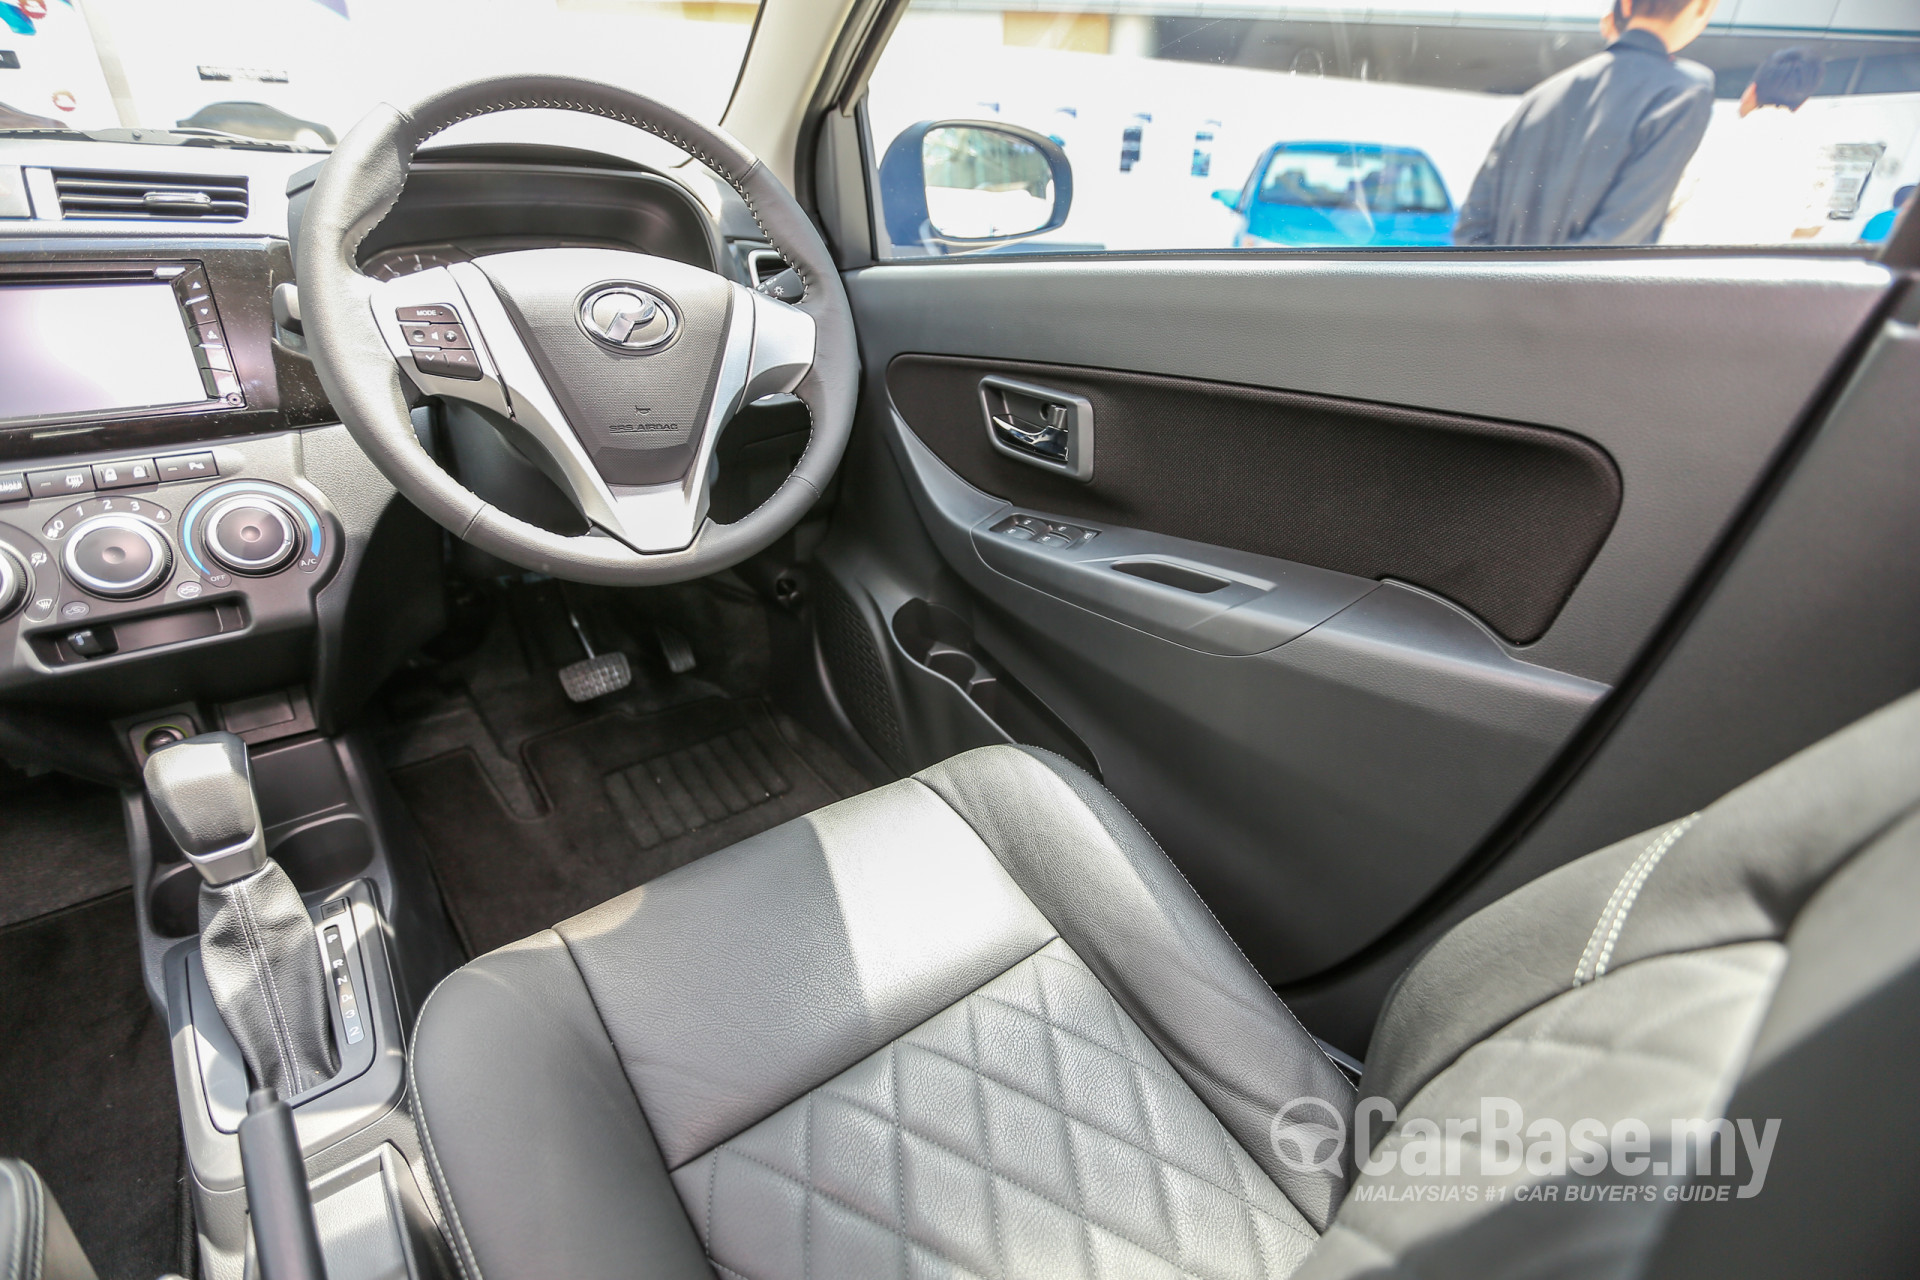 Perodua Bezza D63D (2016) Interior Image #31155 in 